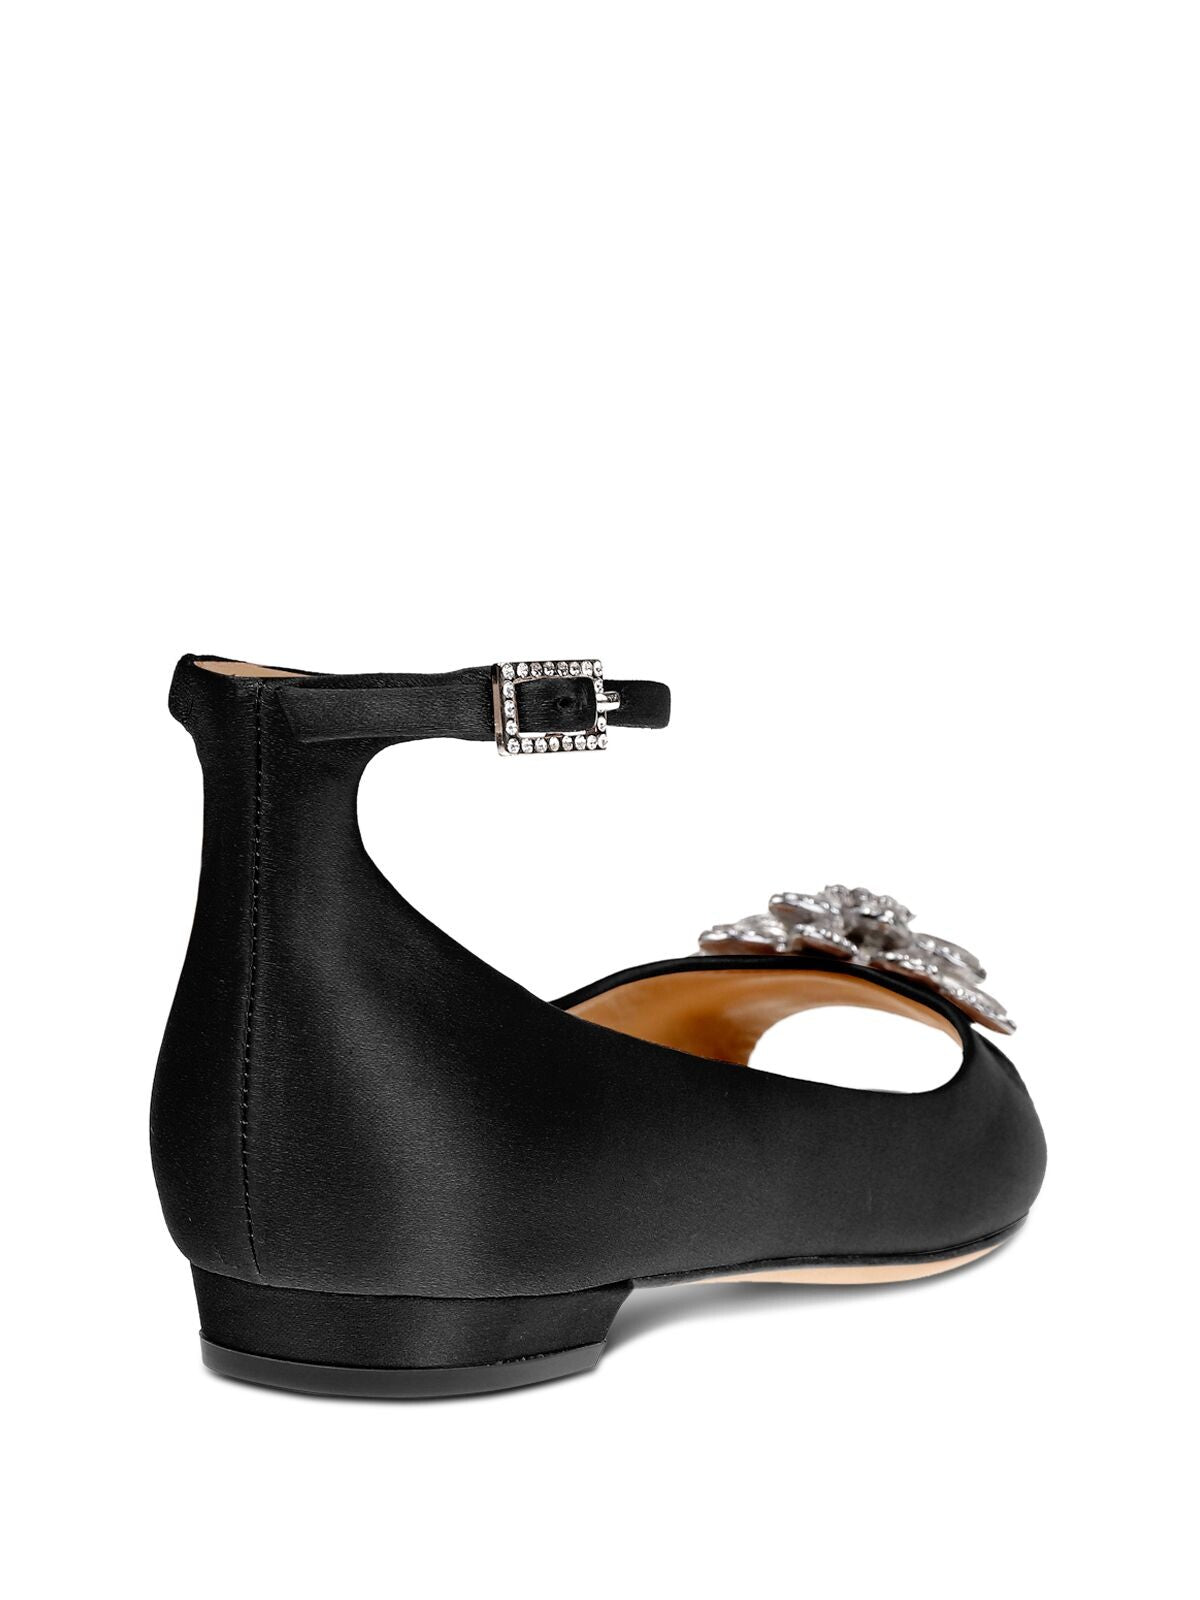 BADGLEY MISCHKA Womens Black Satin Adjustable Ankle Strap Rhinestone Cushioned Kaidence Peep Toe Buckle Dress Flats Shoes 6